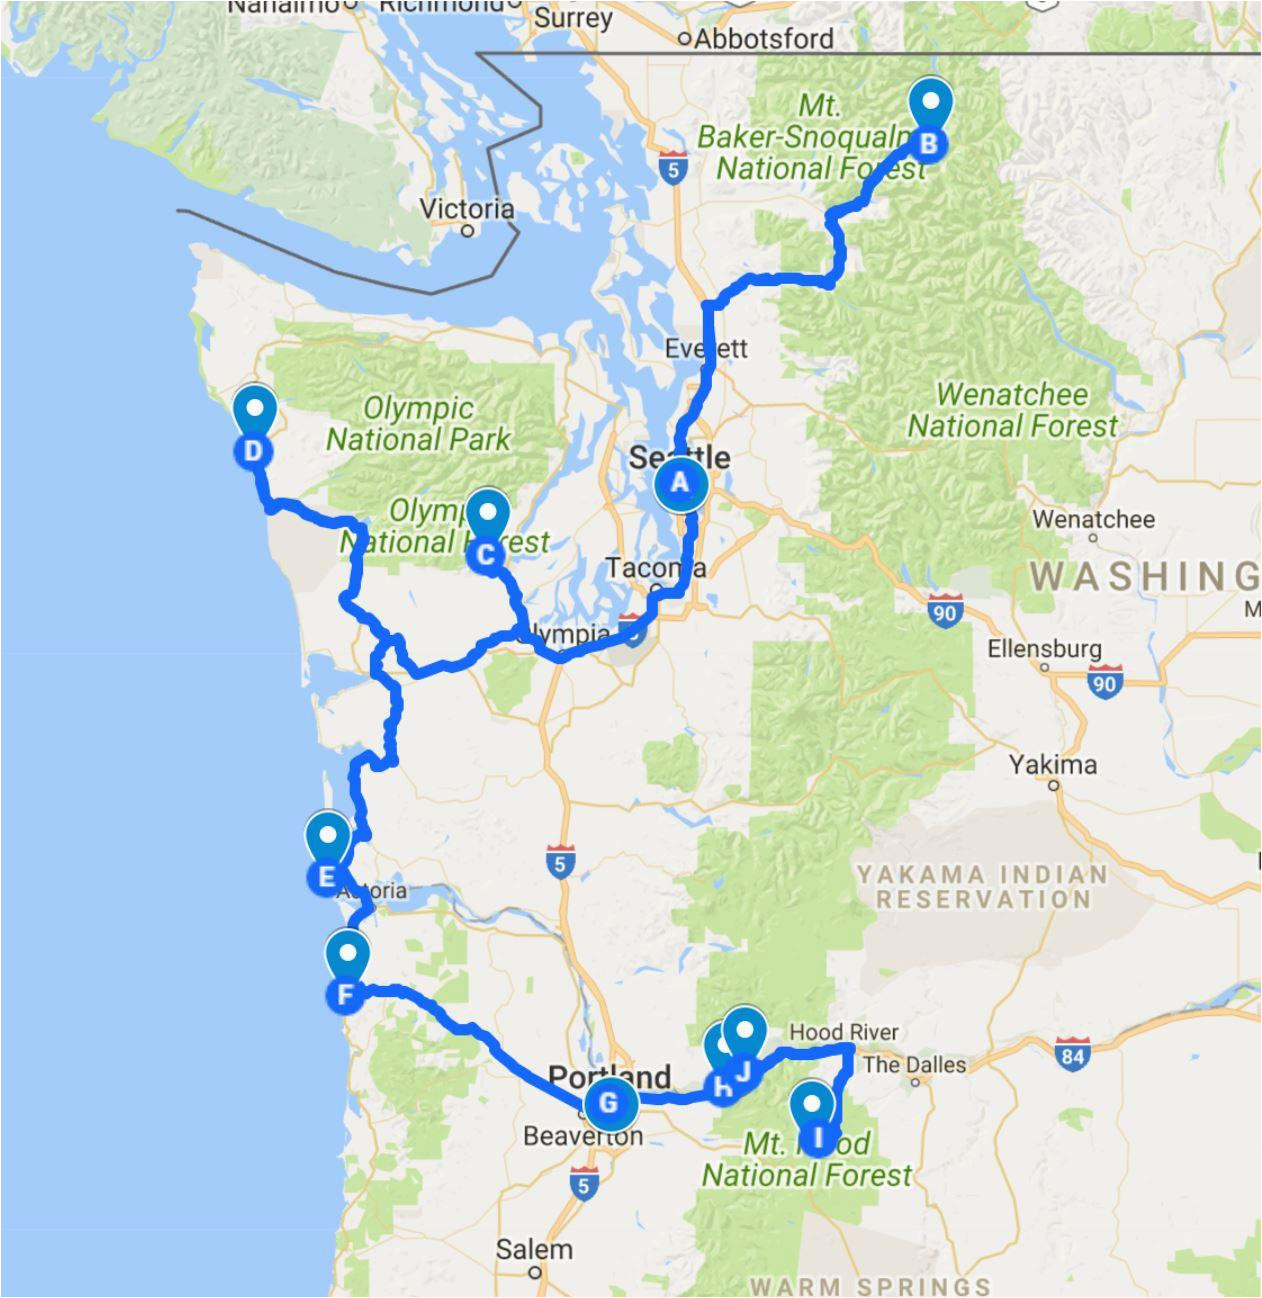 Washington County Oregon Maps Or Simple Road Map Of Washington And Oregon Diamant Ltd Com Of Washington County Oregon Maps 